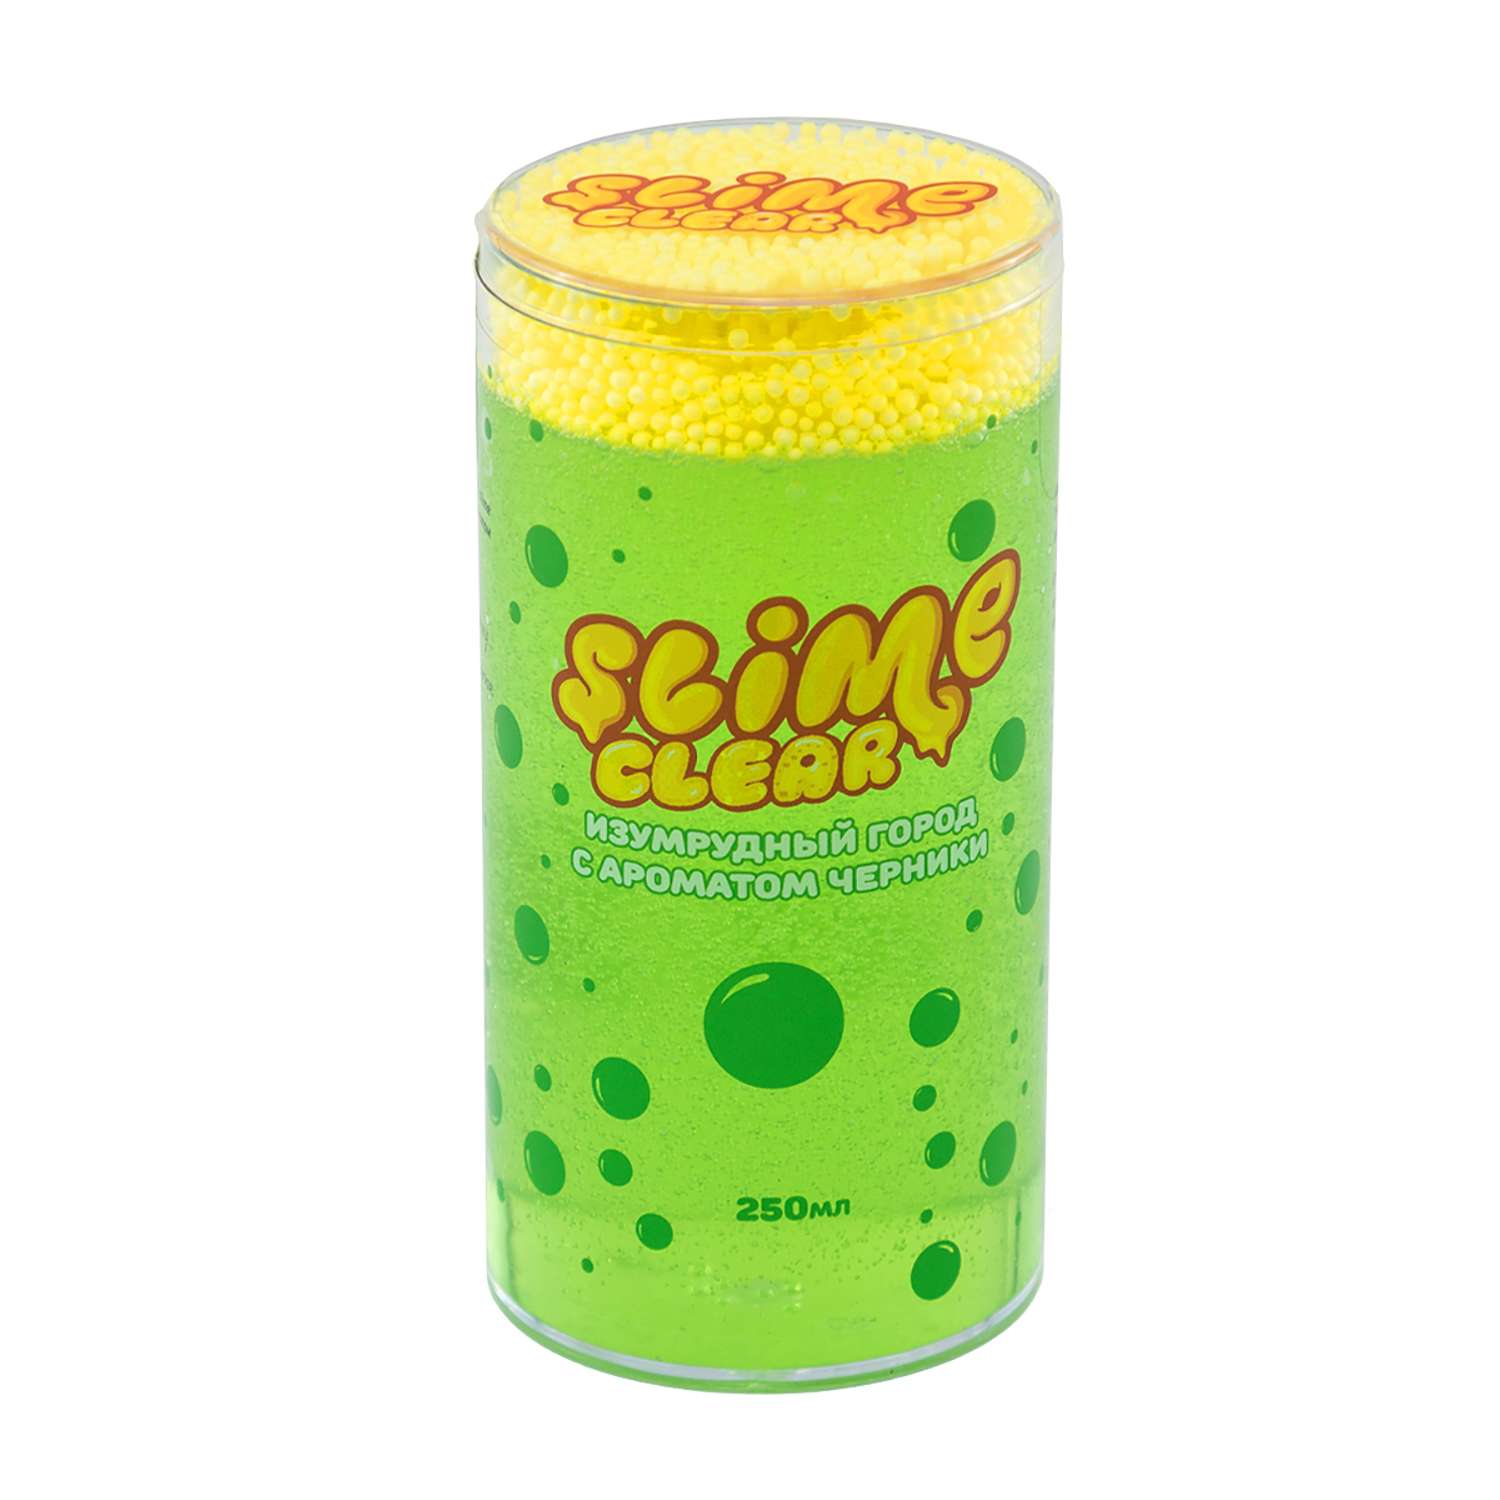 Лизун Slime Ninja Clear аромат черники 250г S130-35 - фото 1